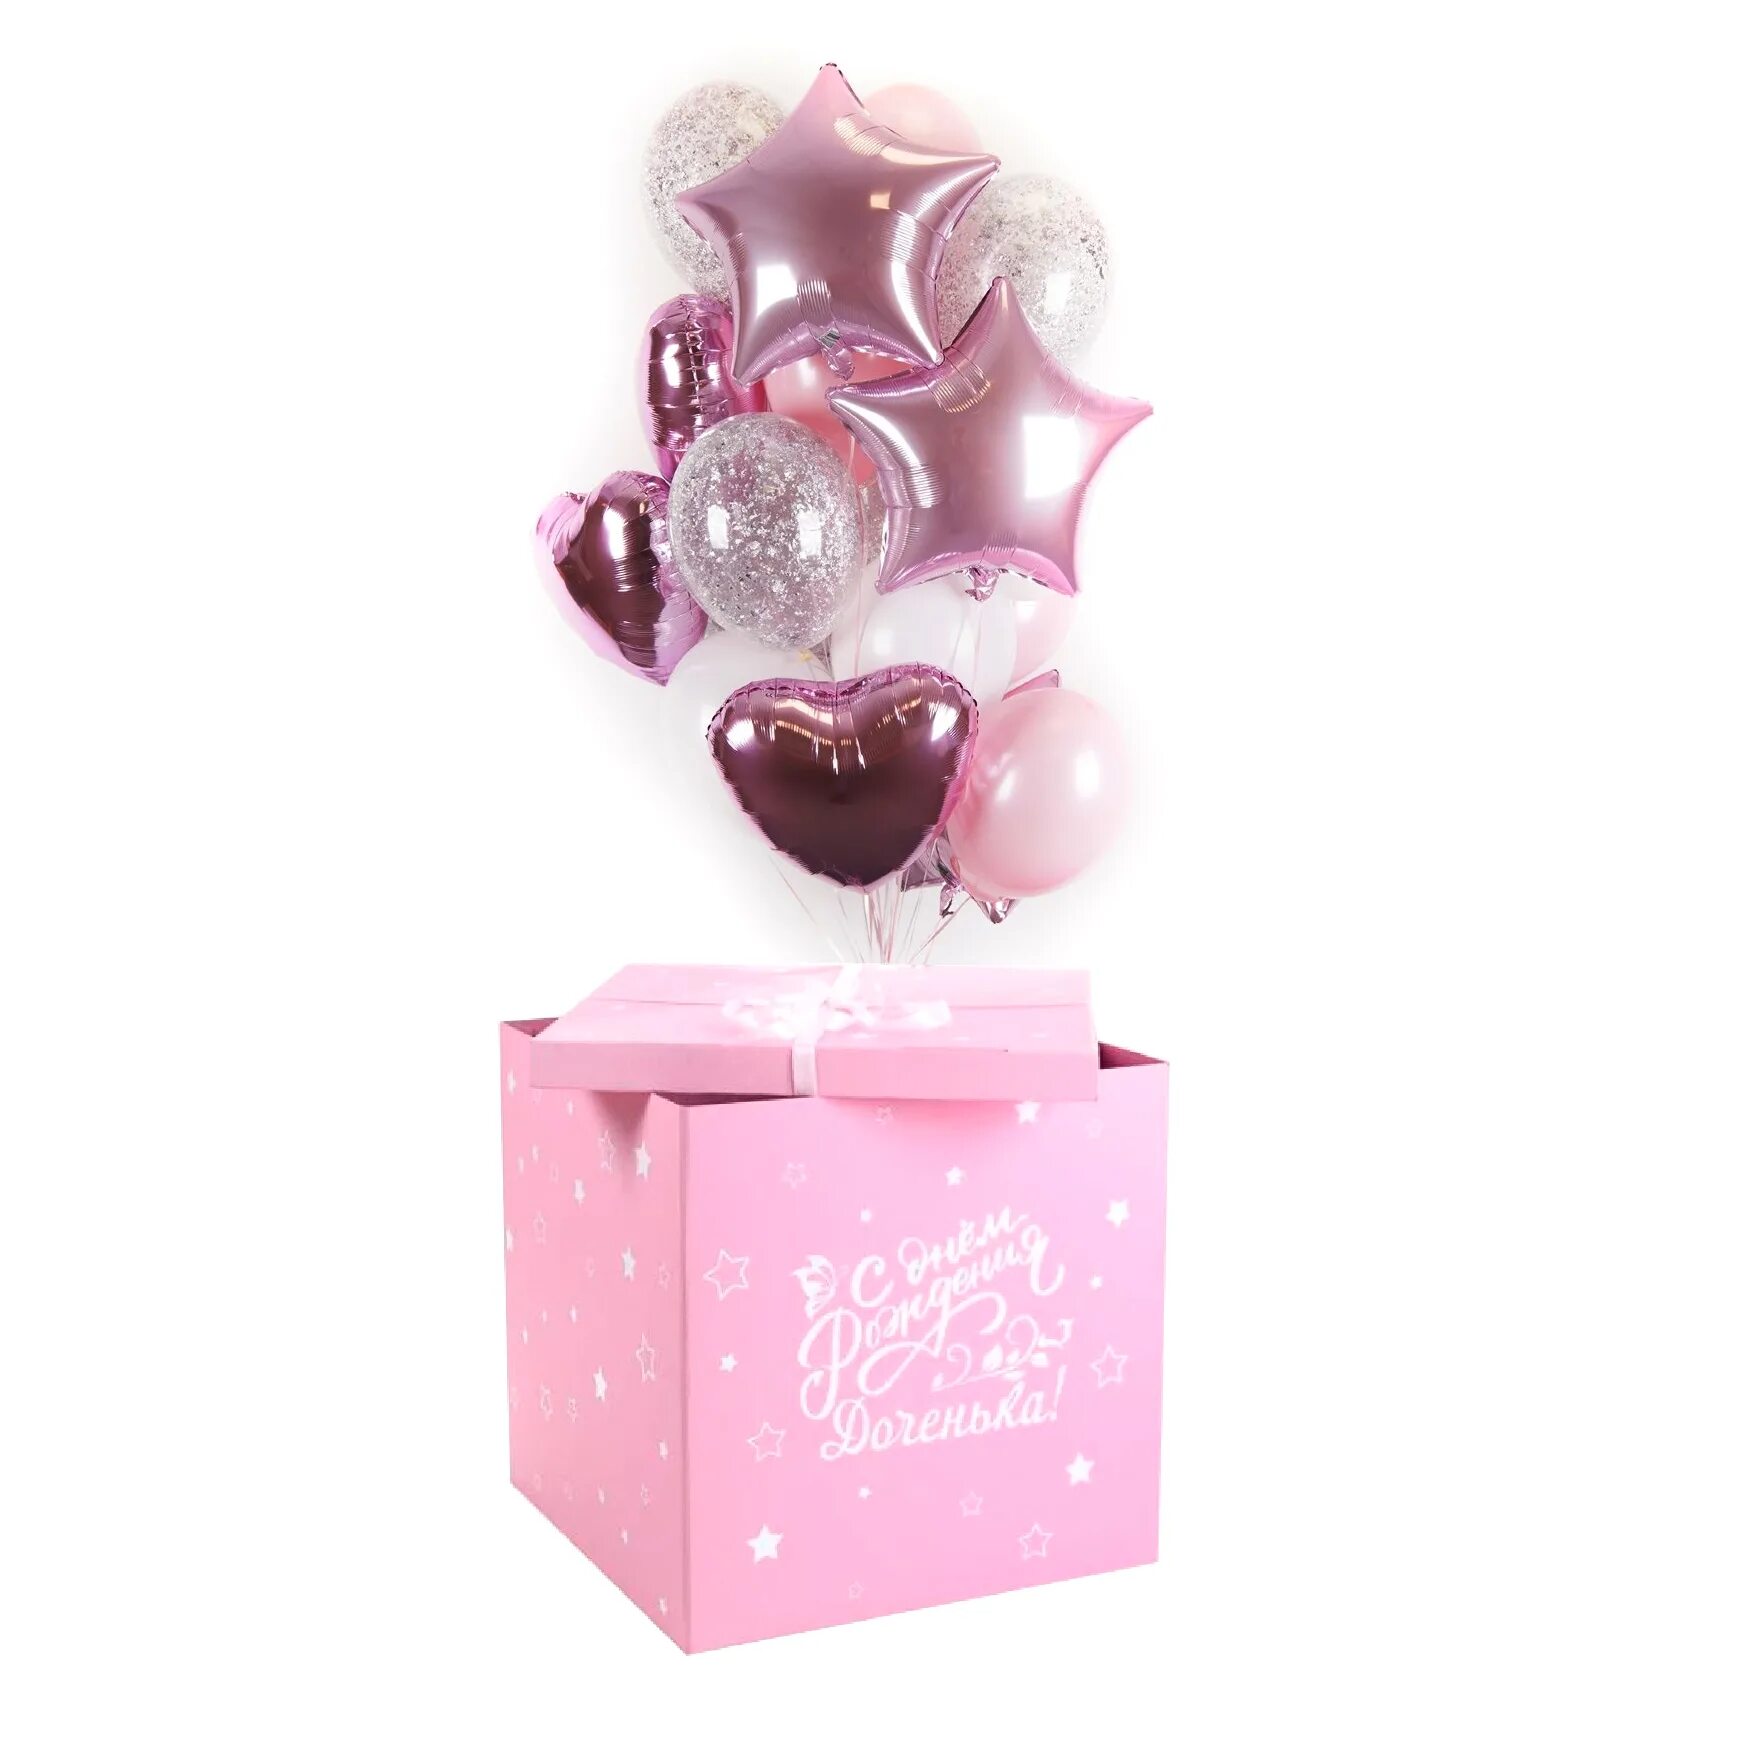 Коробка с шарами купить. Коробка с шарами. Коробка с шарами для девочки. Коробка сюрприз с шарами для девочки. Розовая коробка сюрприз с шарами.